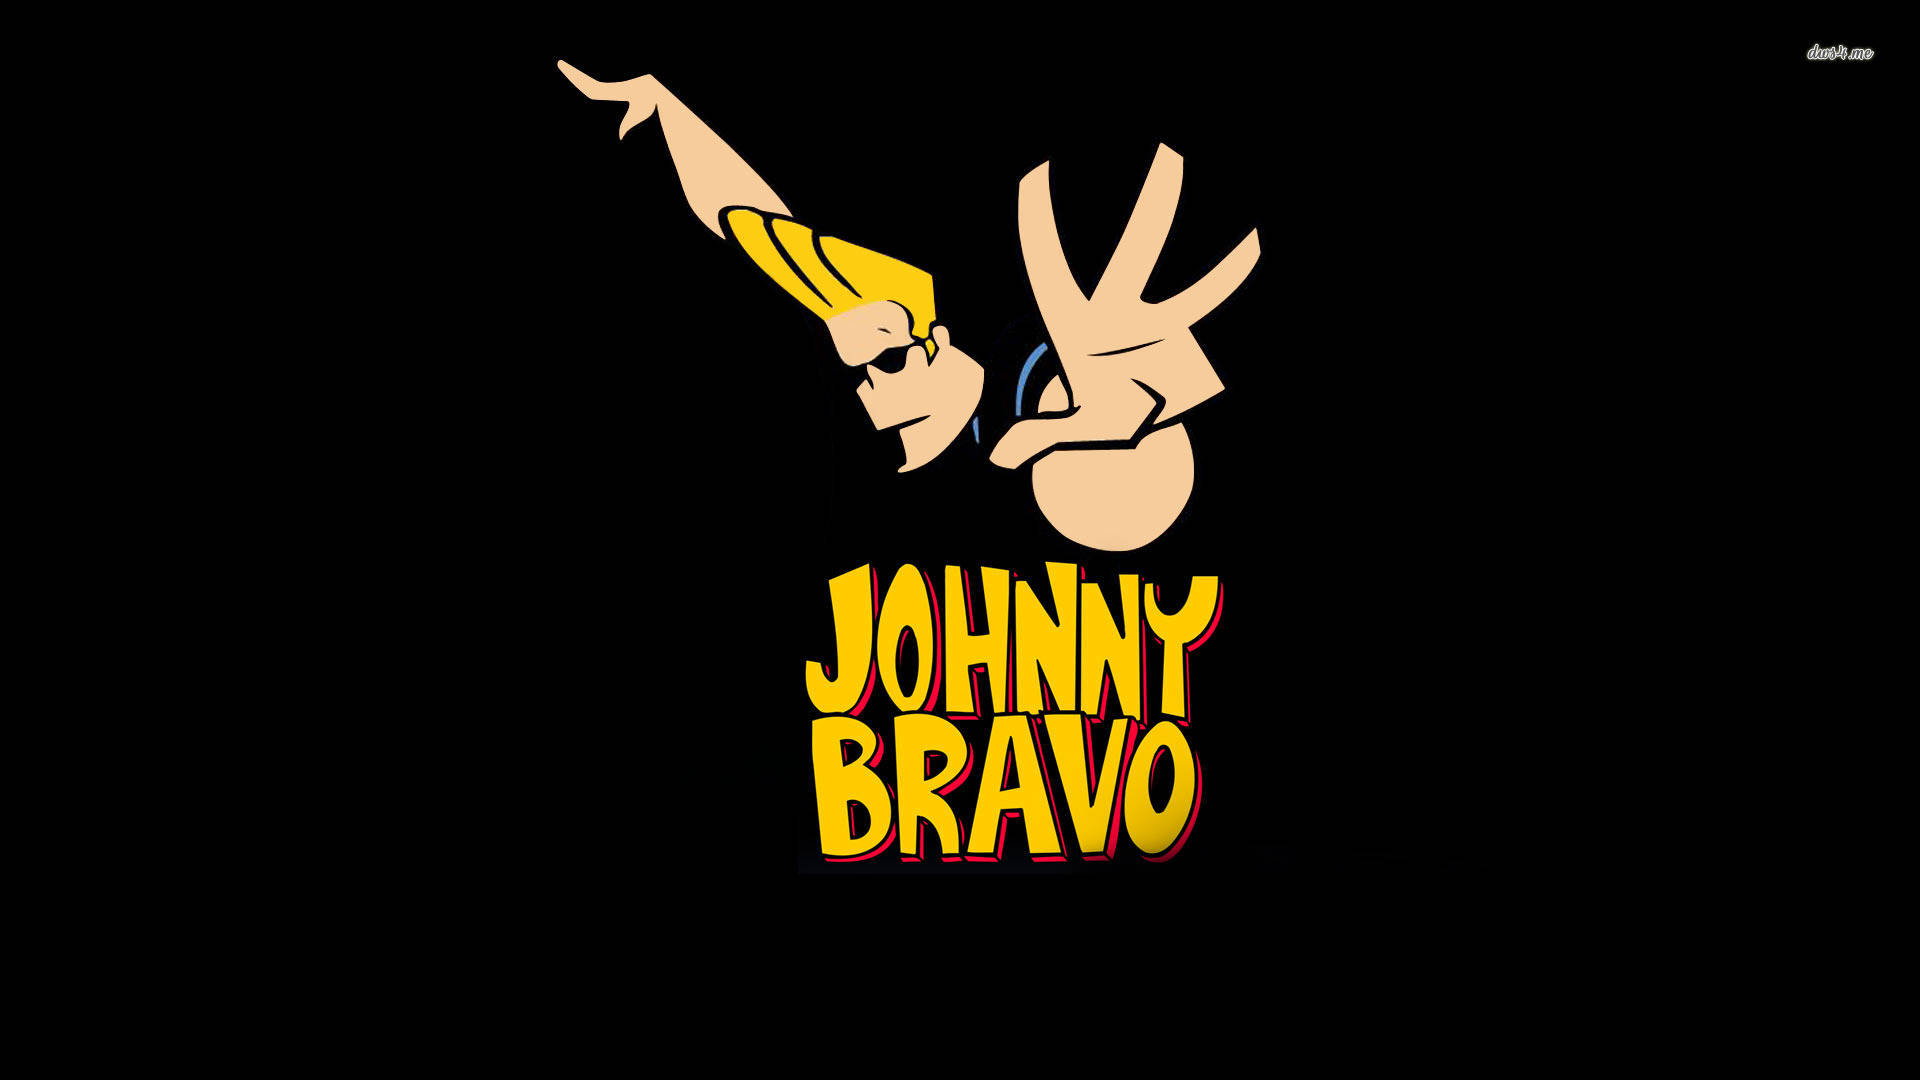 Johnny Bravo Show Background